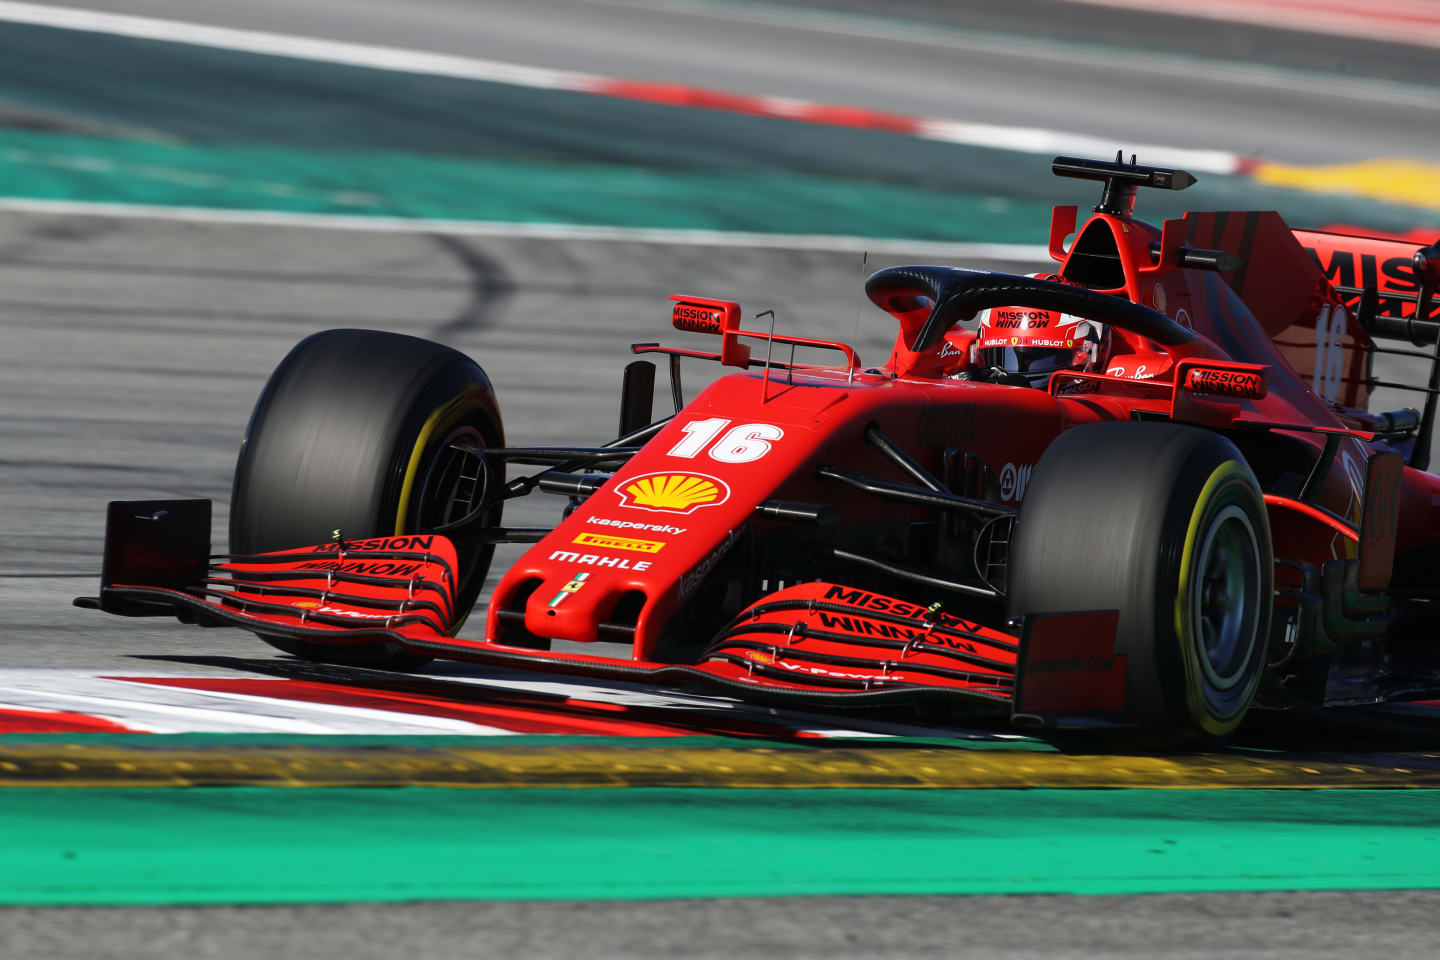 BARCELONA, SPAIN - FEBRUARY 28: Charles Leclerc of Monaco driving the (16) Scuderia Ferrari SF1000